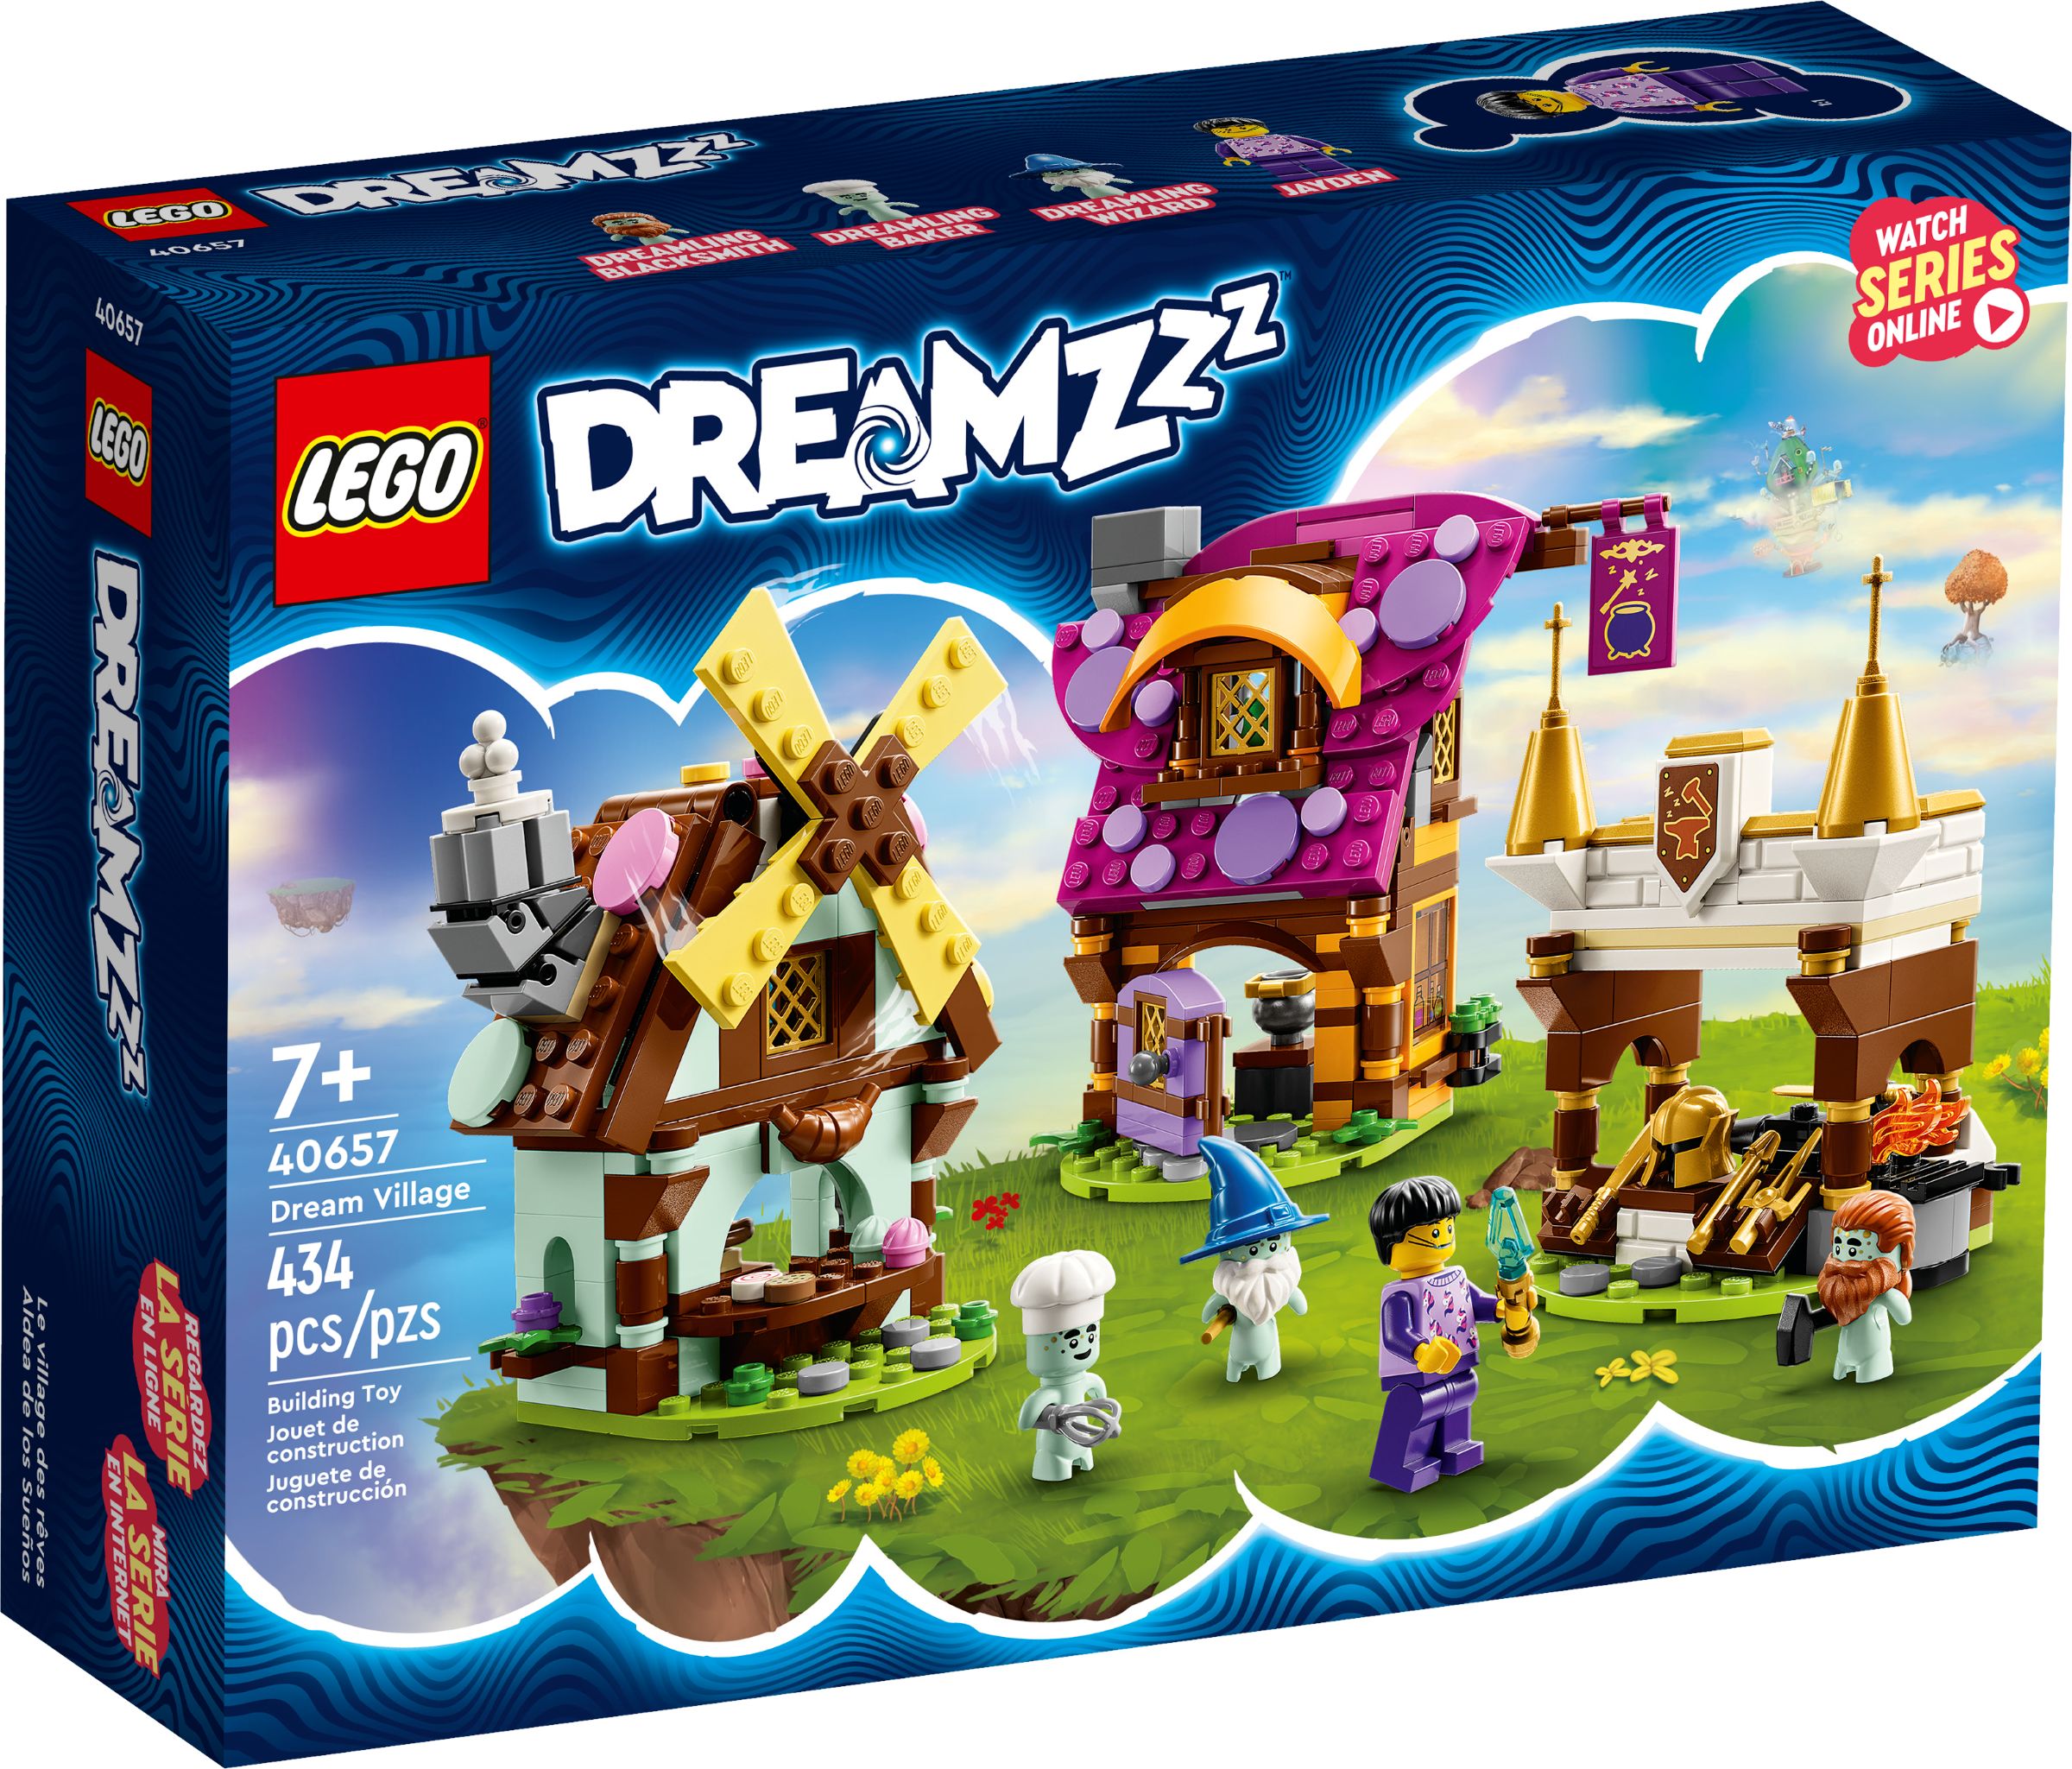 LEGO Dreamzzz 40657 Traumdorf LEGO_40657_alt1.jpg